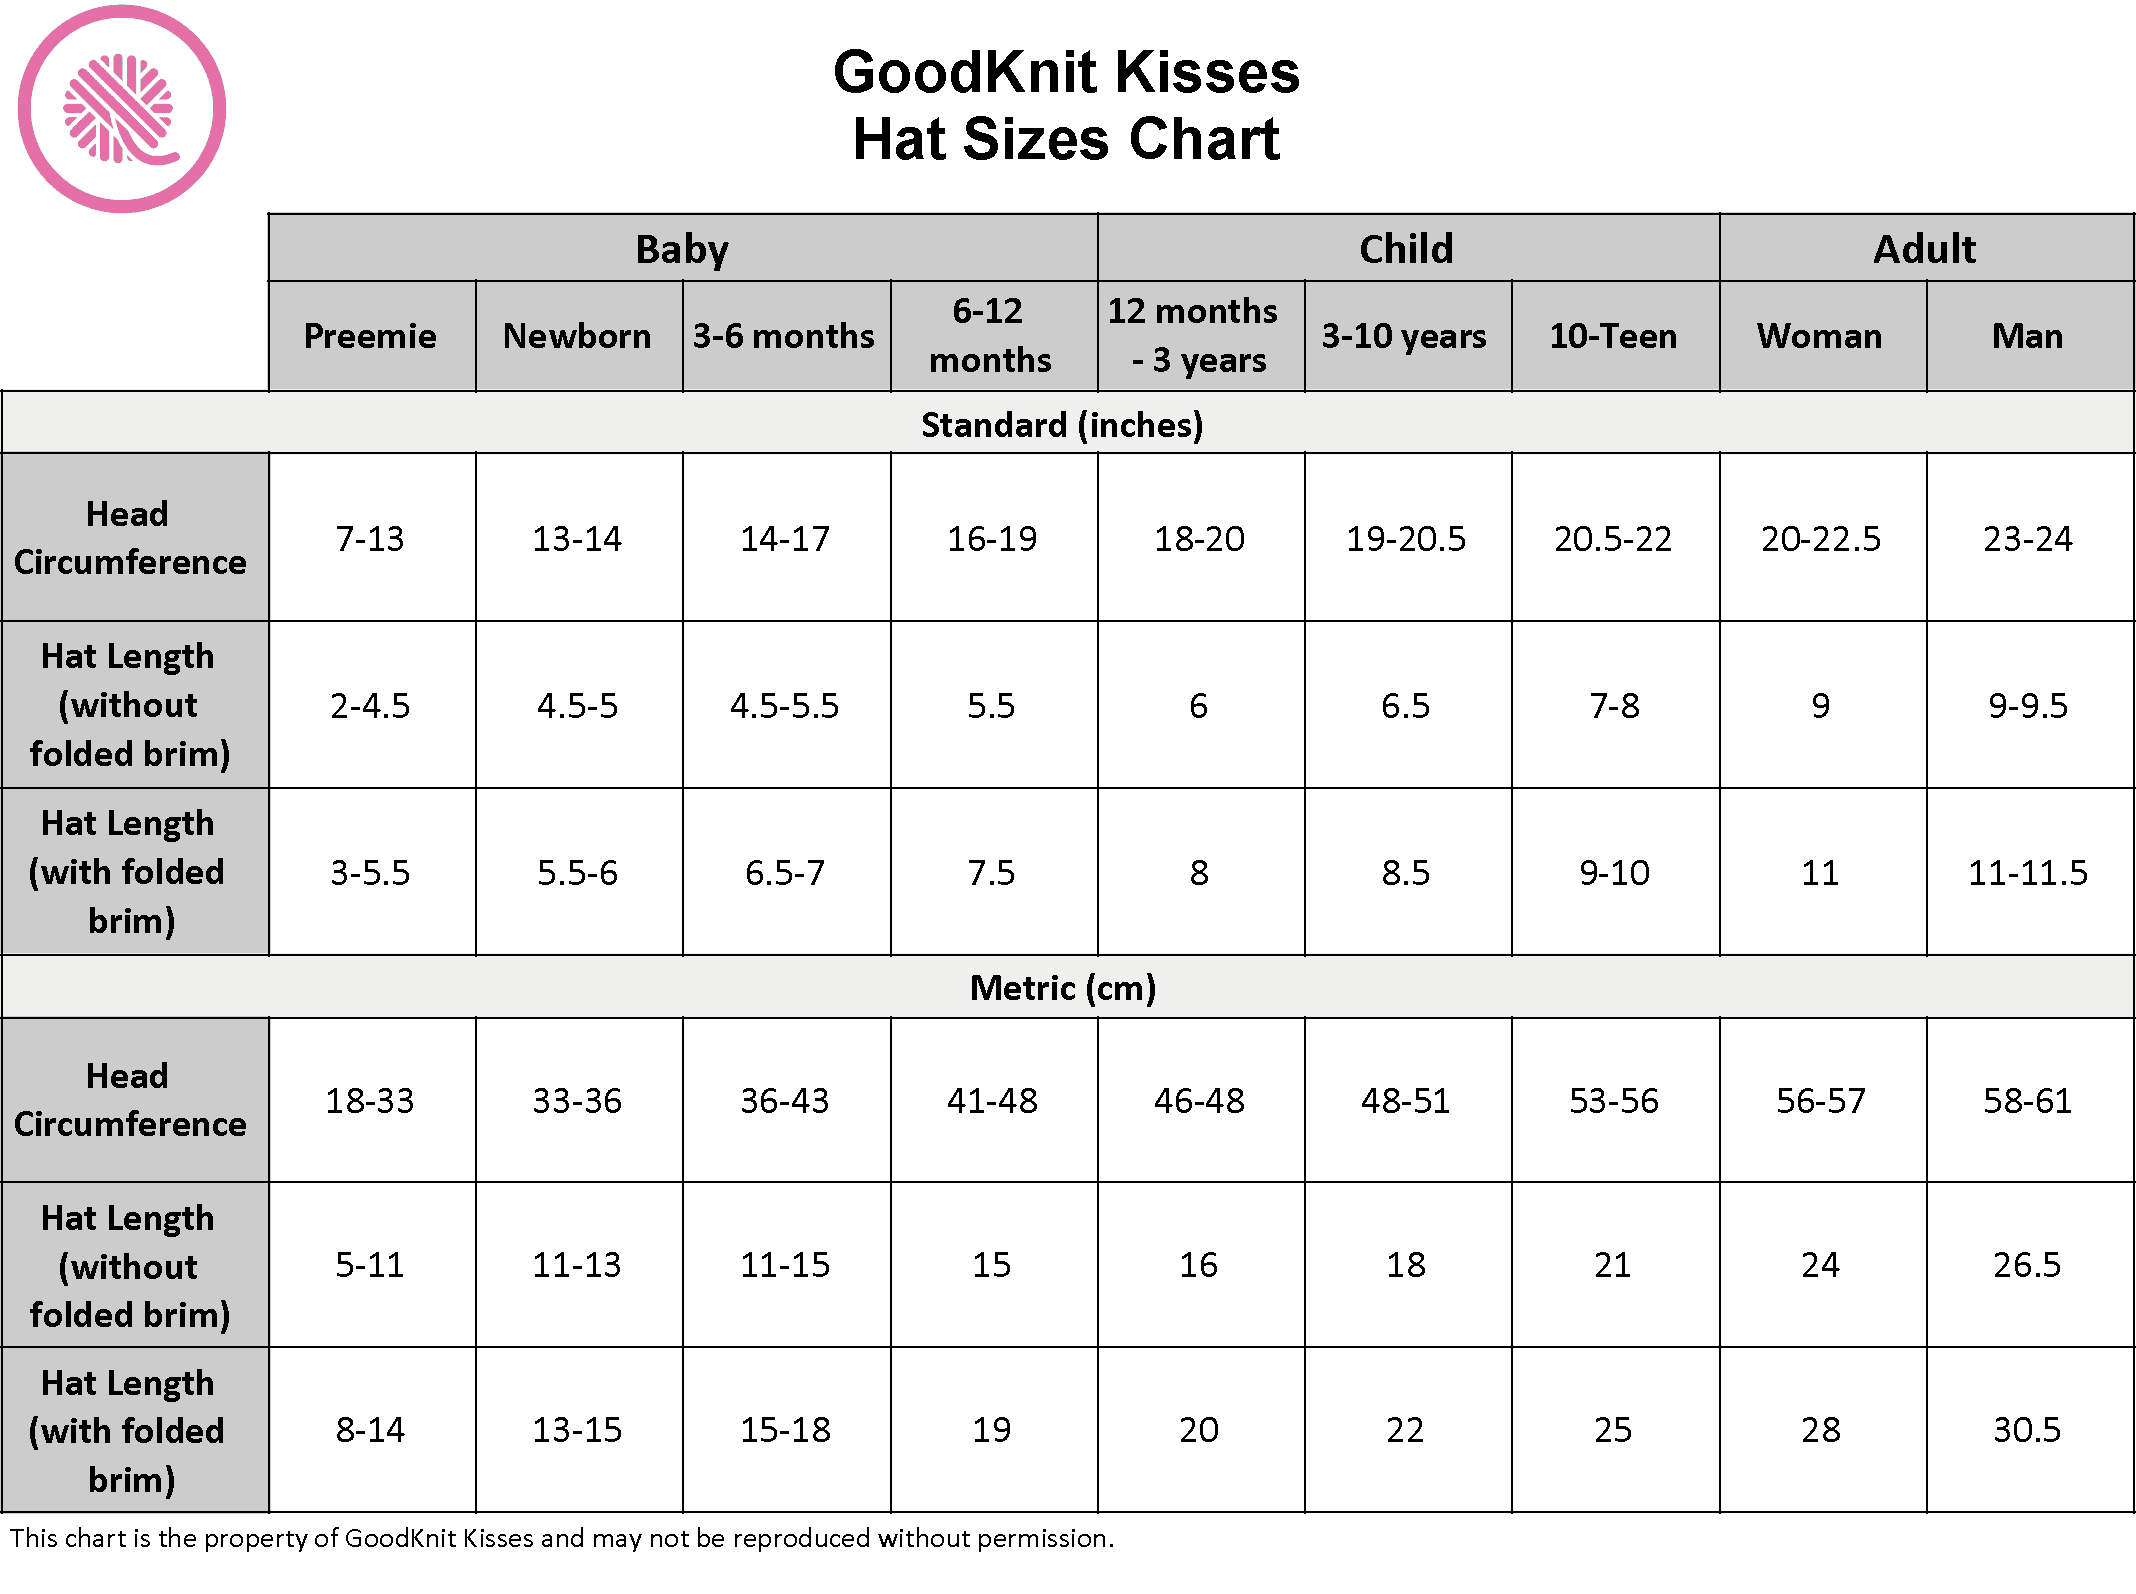 Hat Sizes Chart Goodknit Kisses